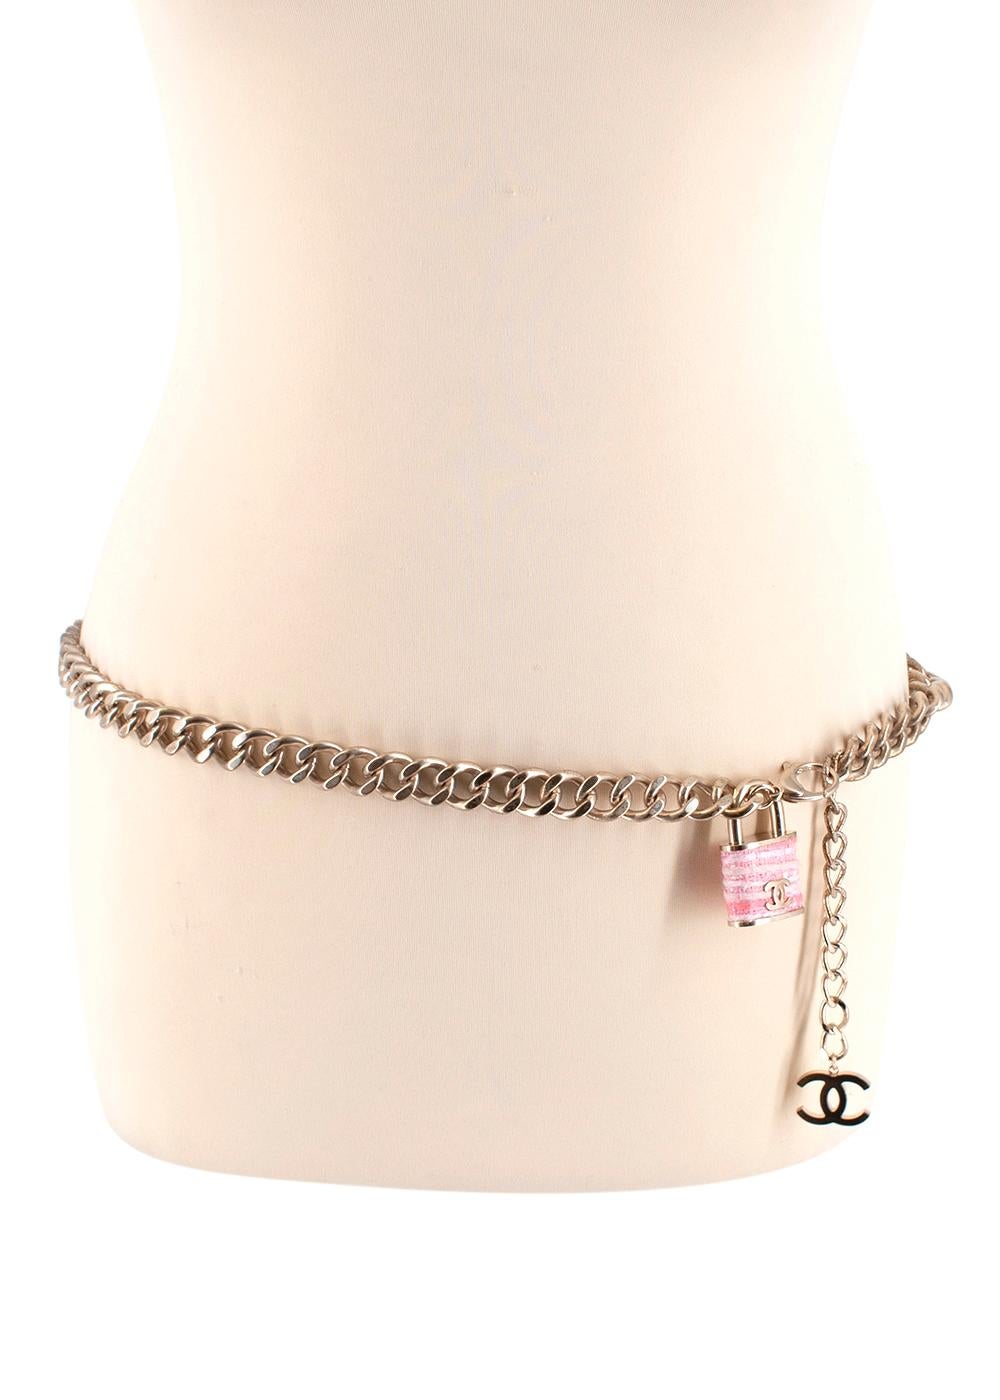 pink chanel belt